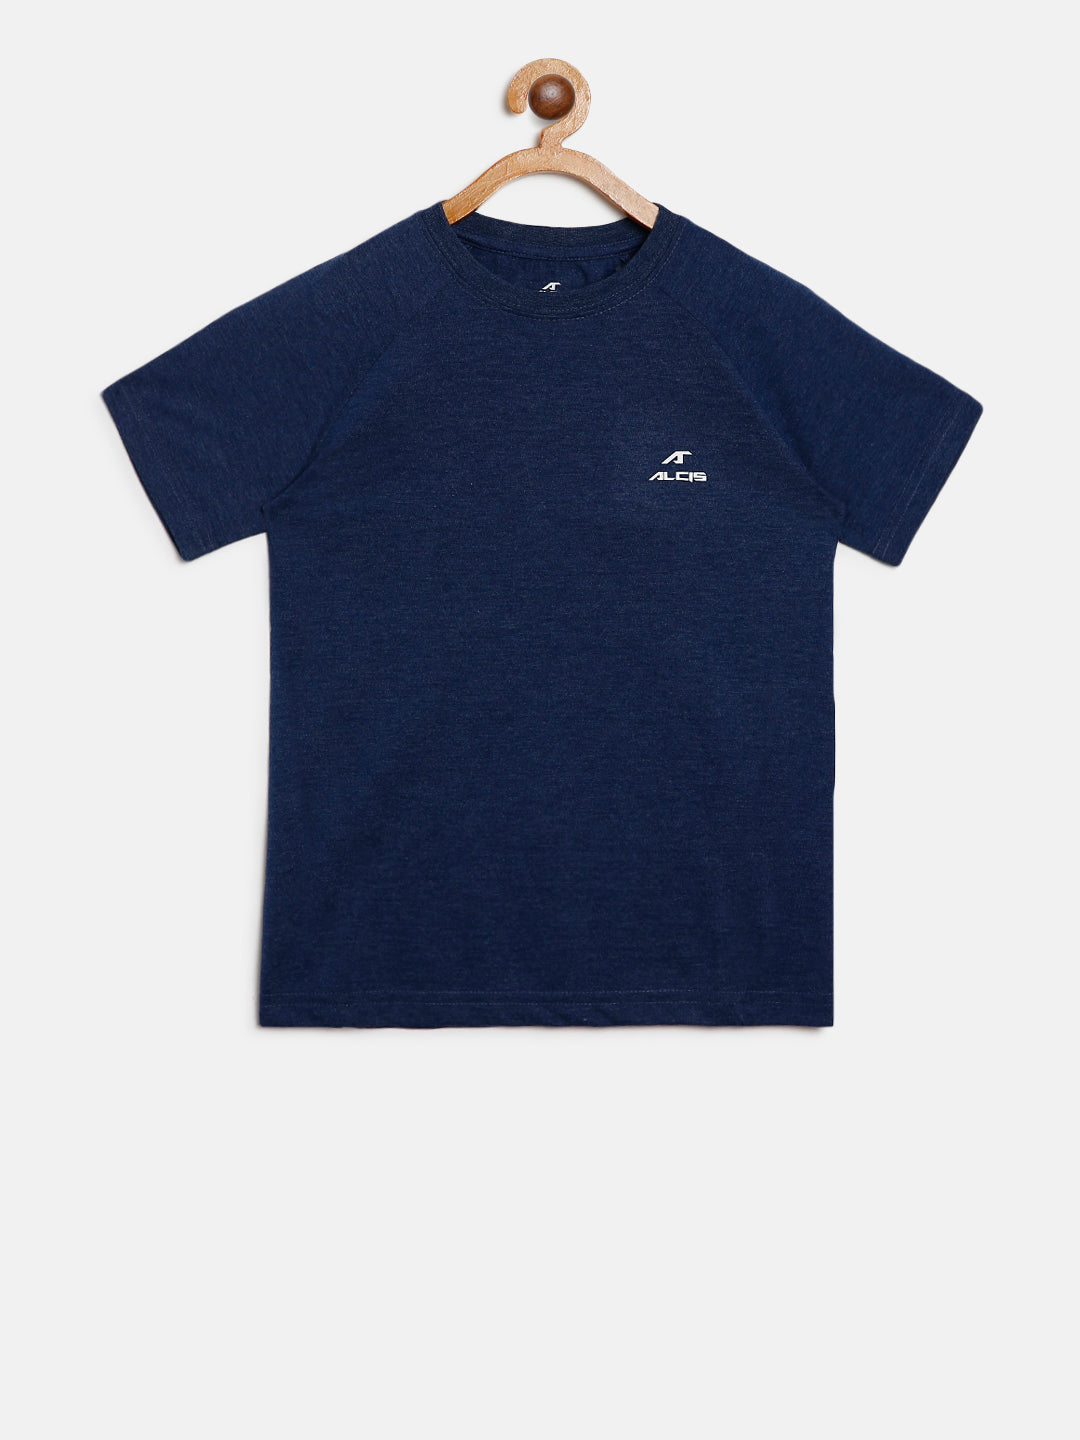 Alcis Boys Navy Blue Back Print Detail Round Neck T-shirt BTESST2301-4Y